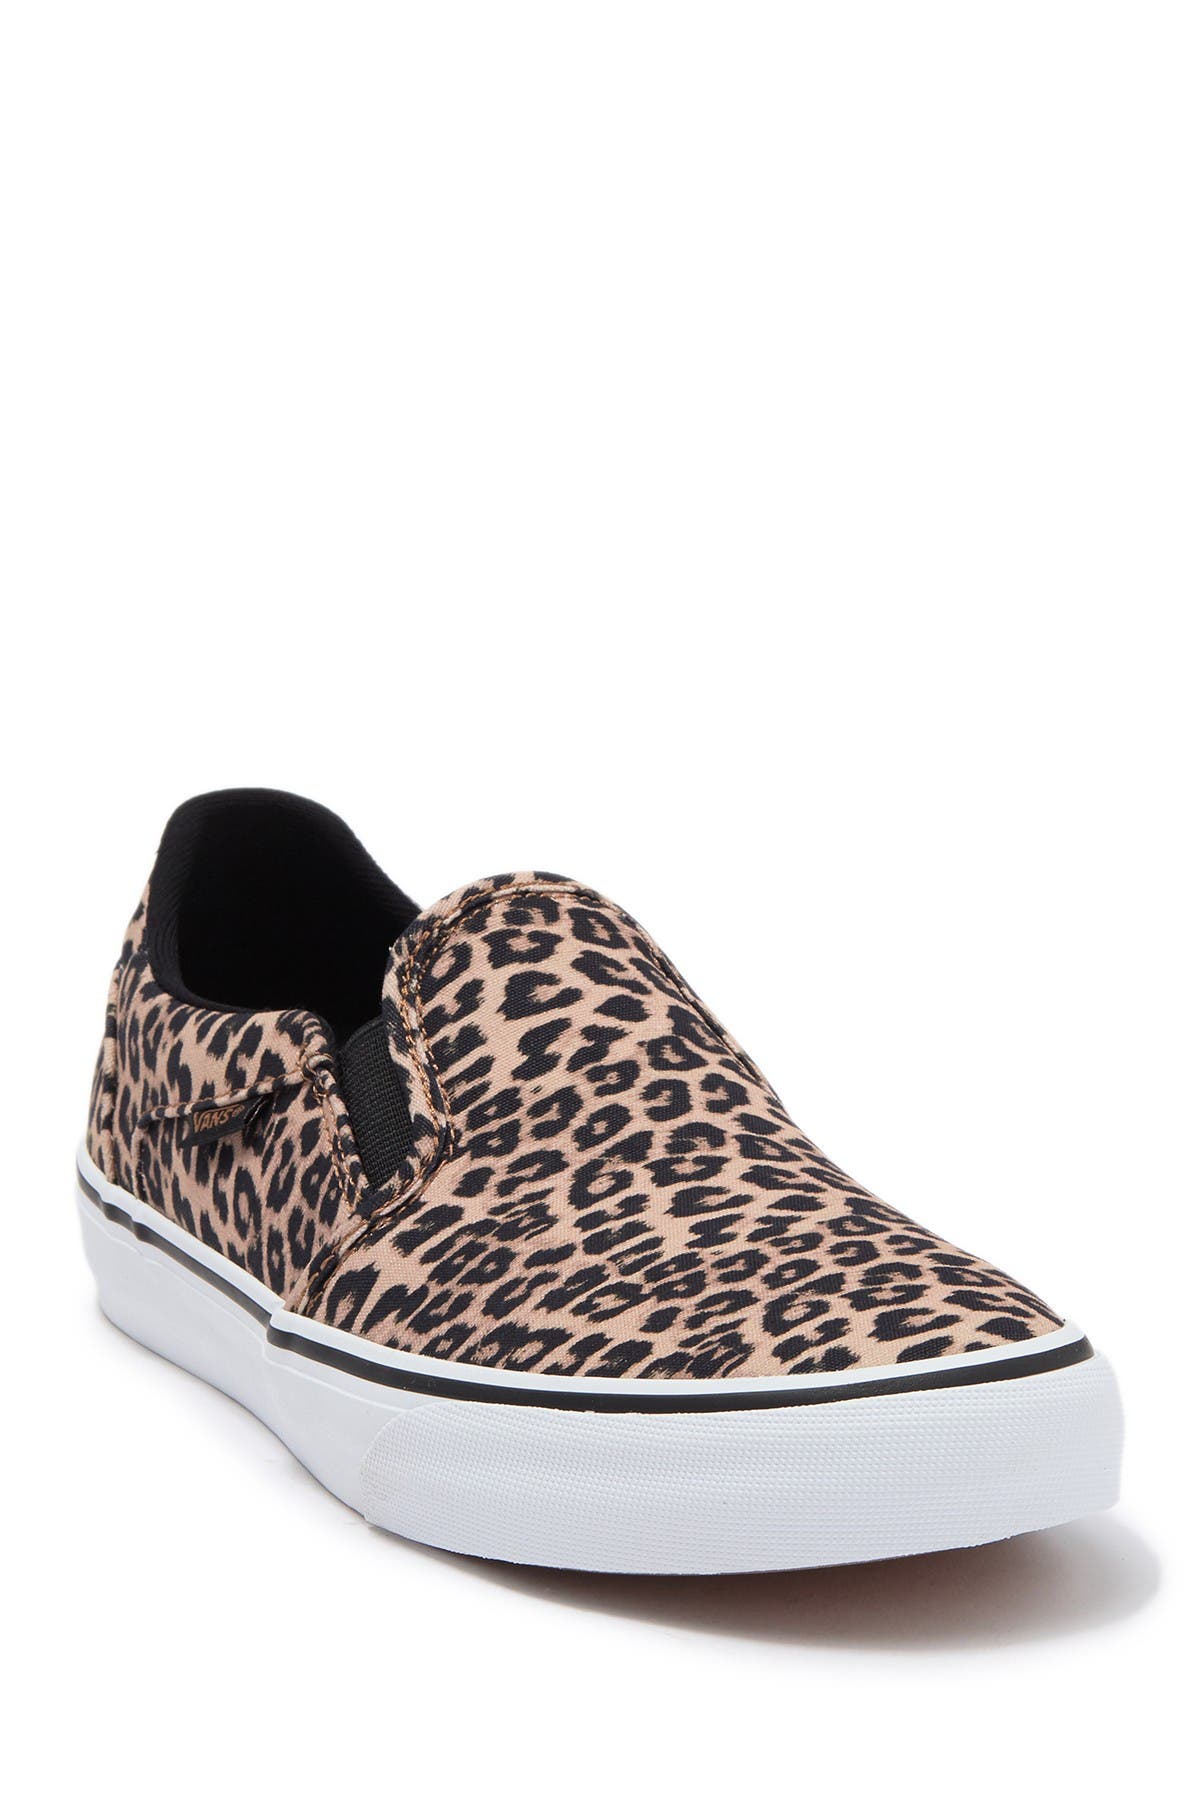 vans cheetah shoes